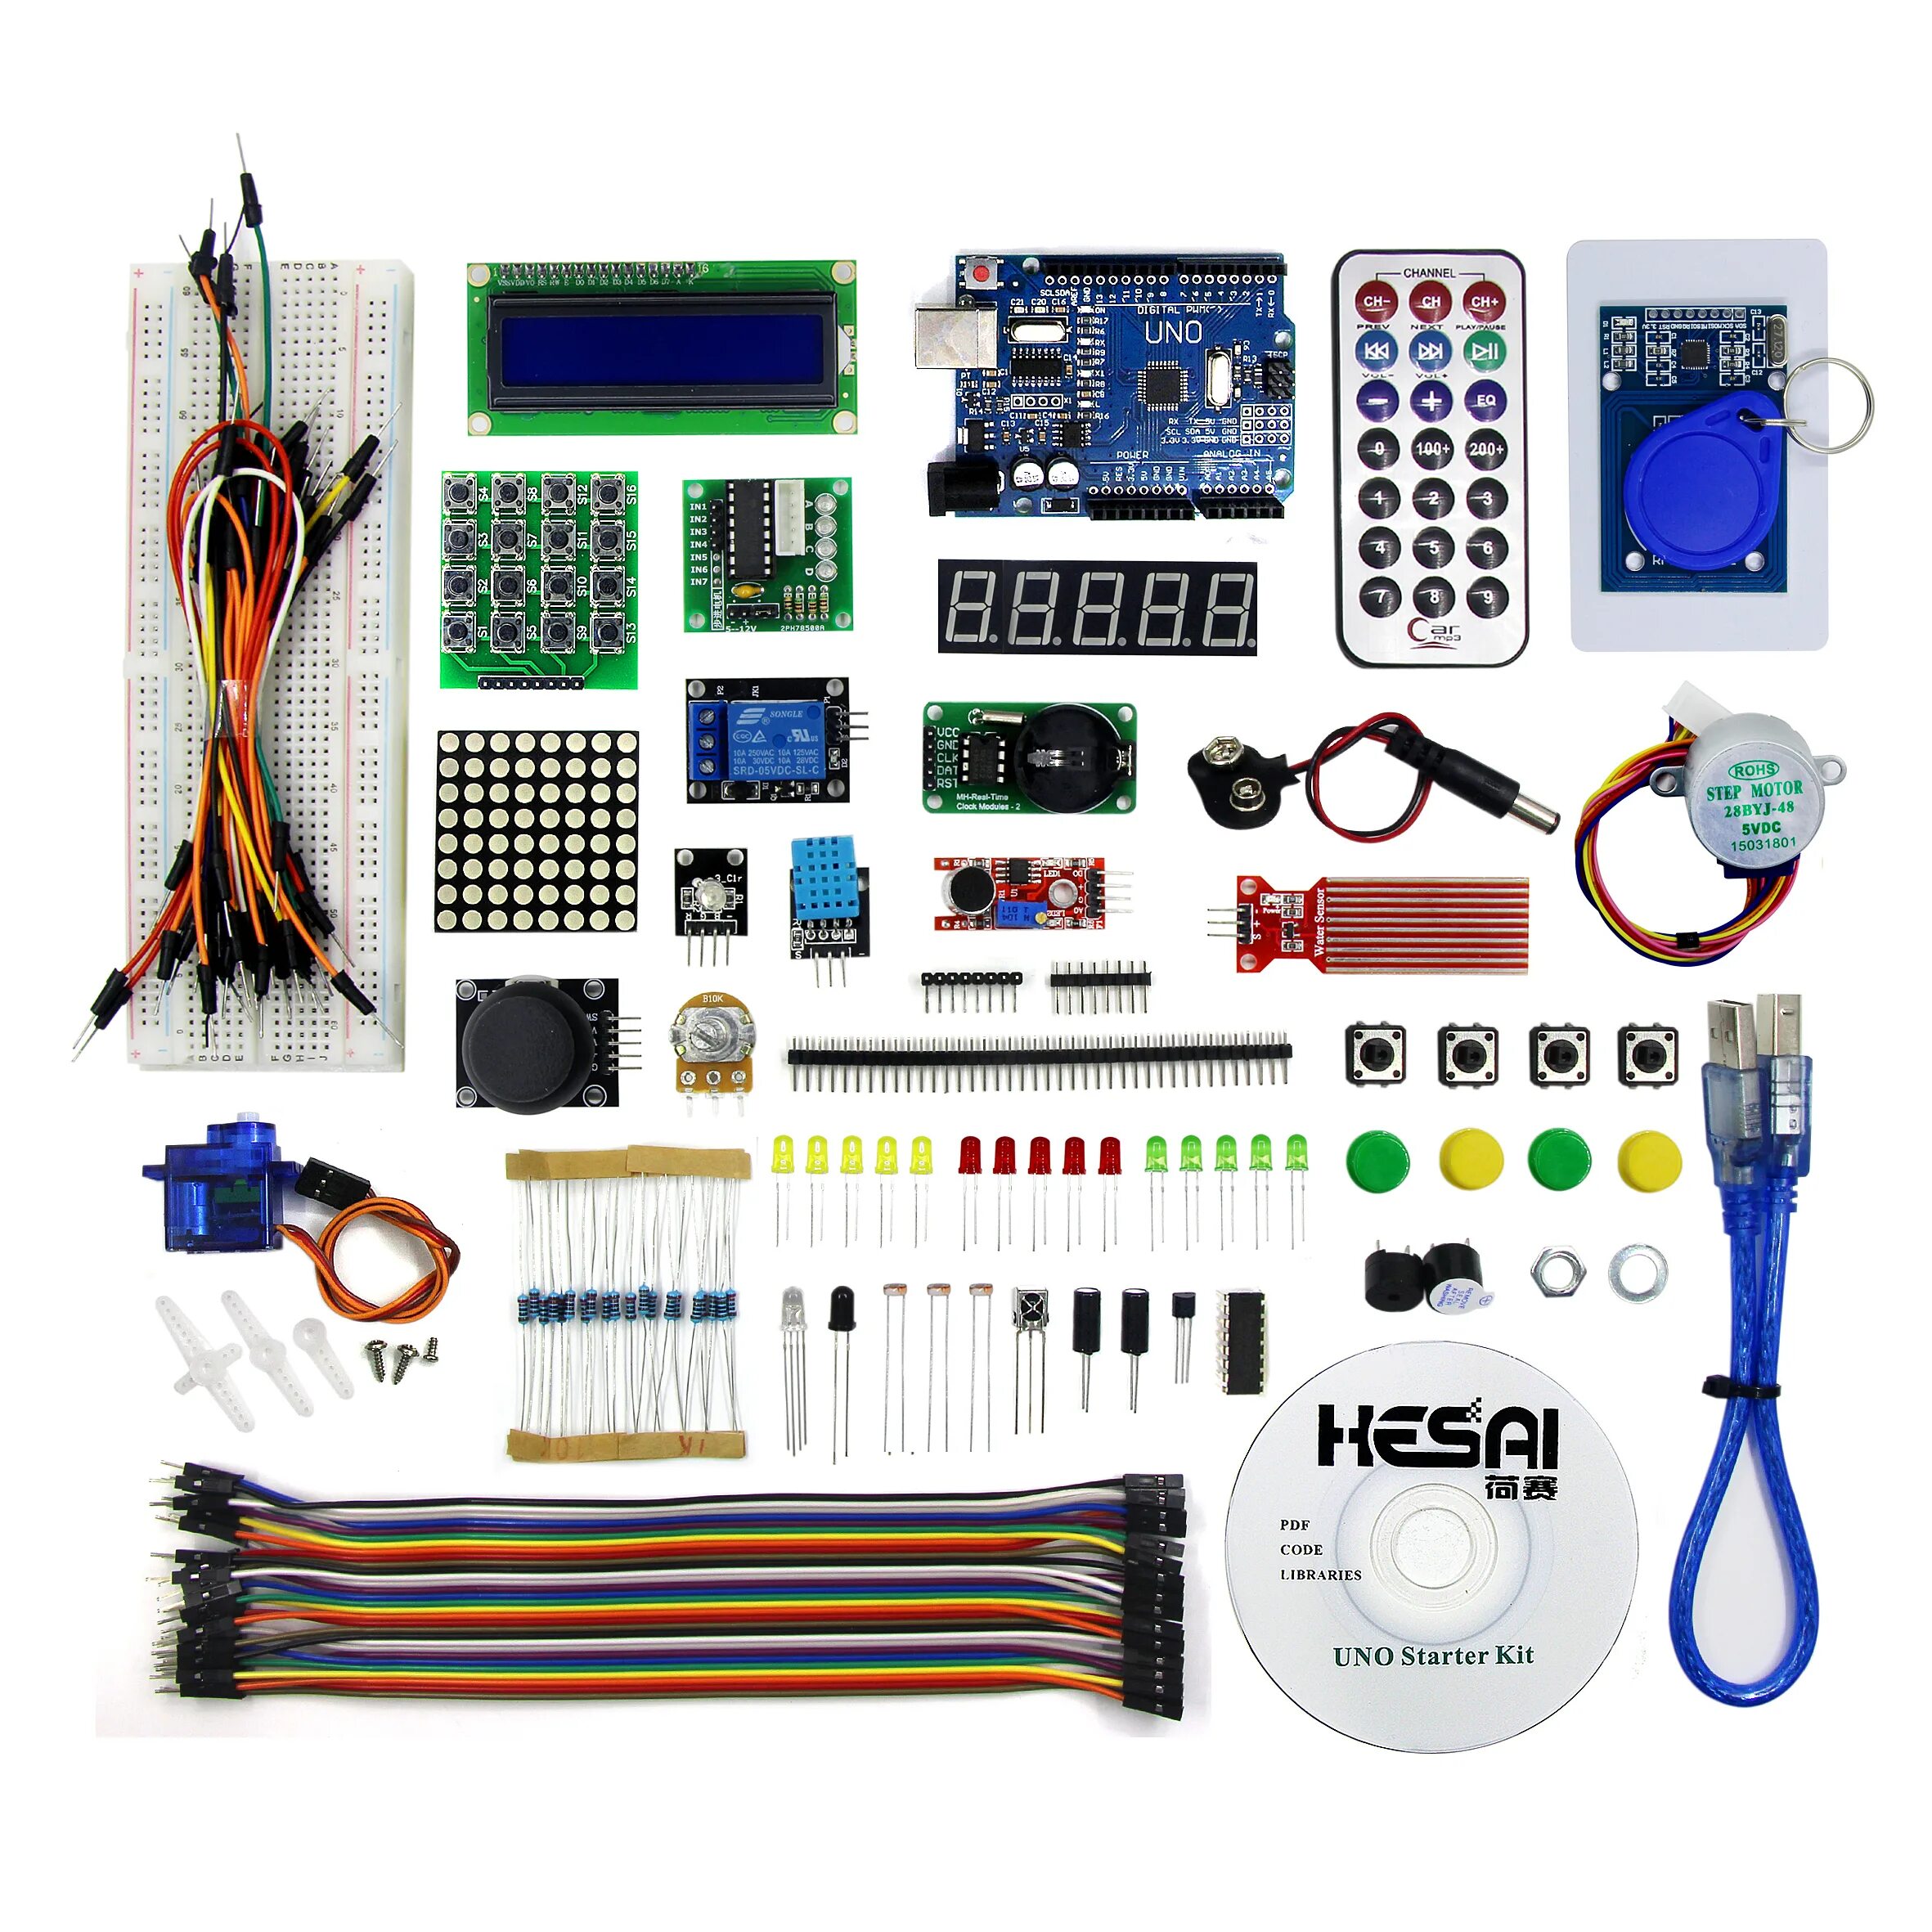 Arduino Starter Kit uno r3. Arduino uno. Набор Starter Kit. RFID Starter Kit for Arduino uno r3. Starter Kit uno r3 набор. Набор starter kit